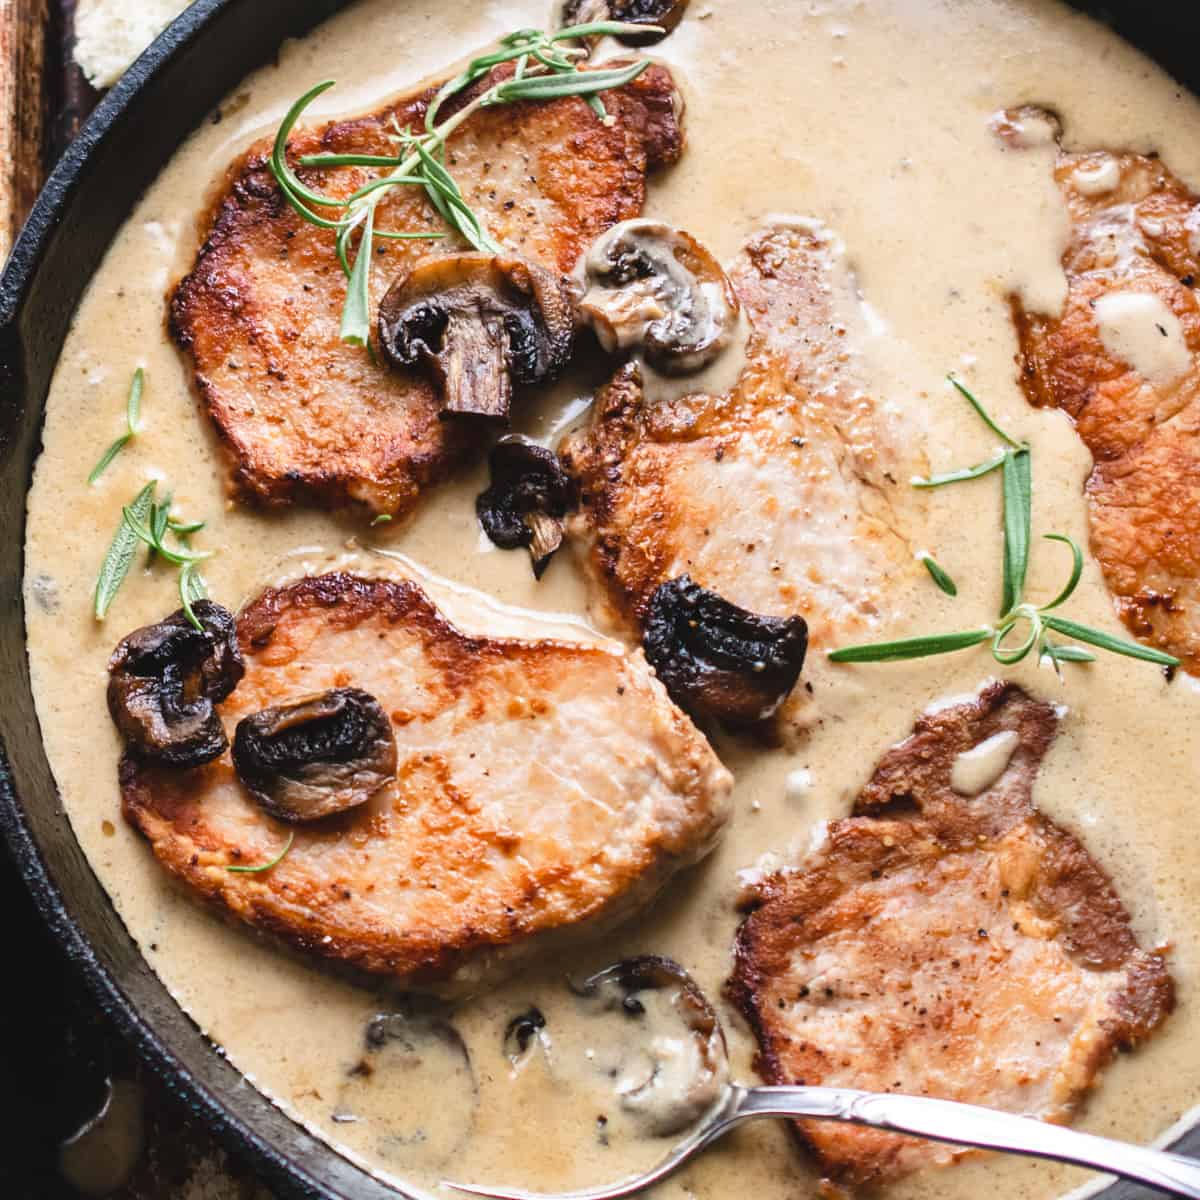 Boneless pork chops in mushroom gravy with rosemary and a spoon.